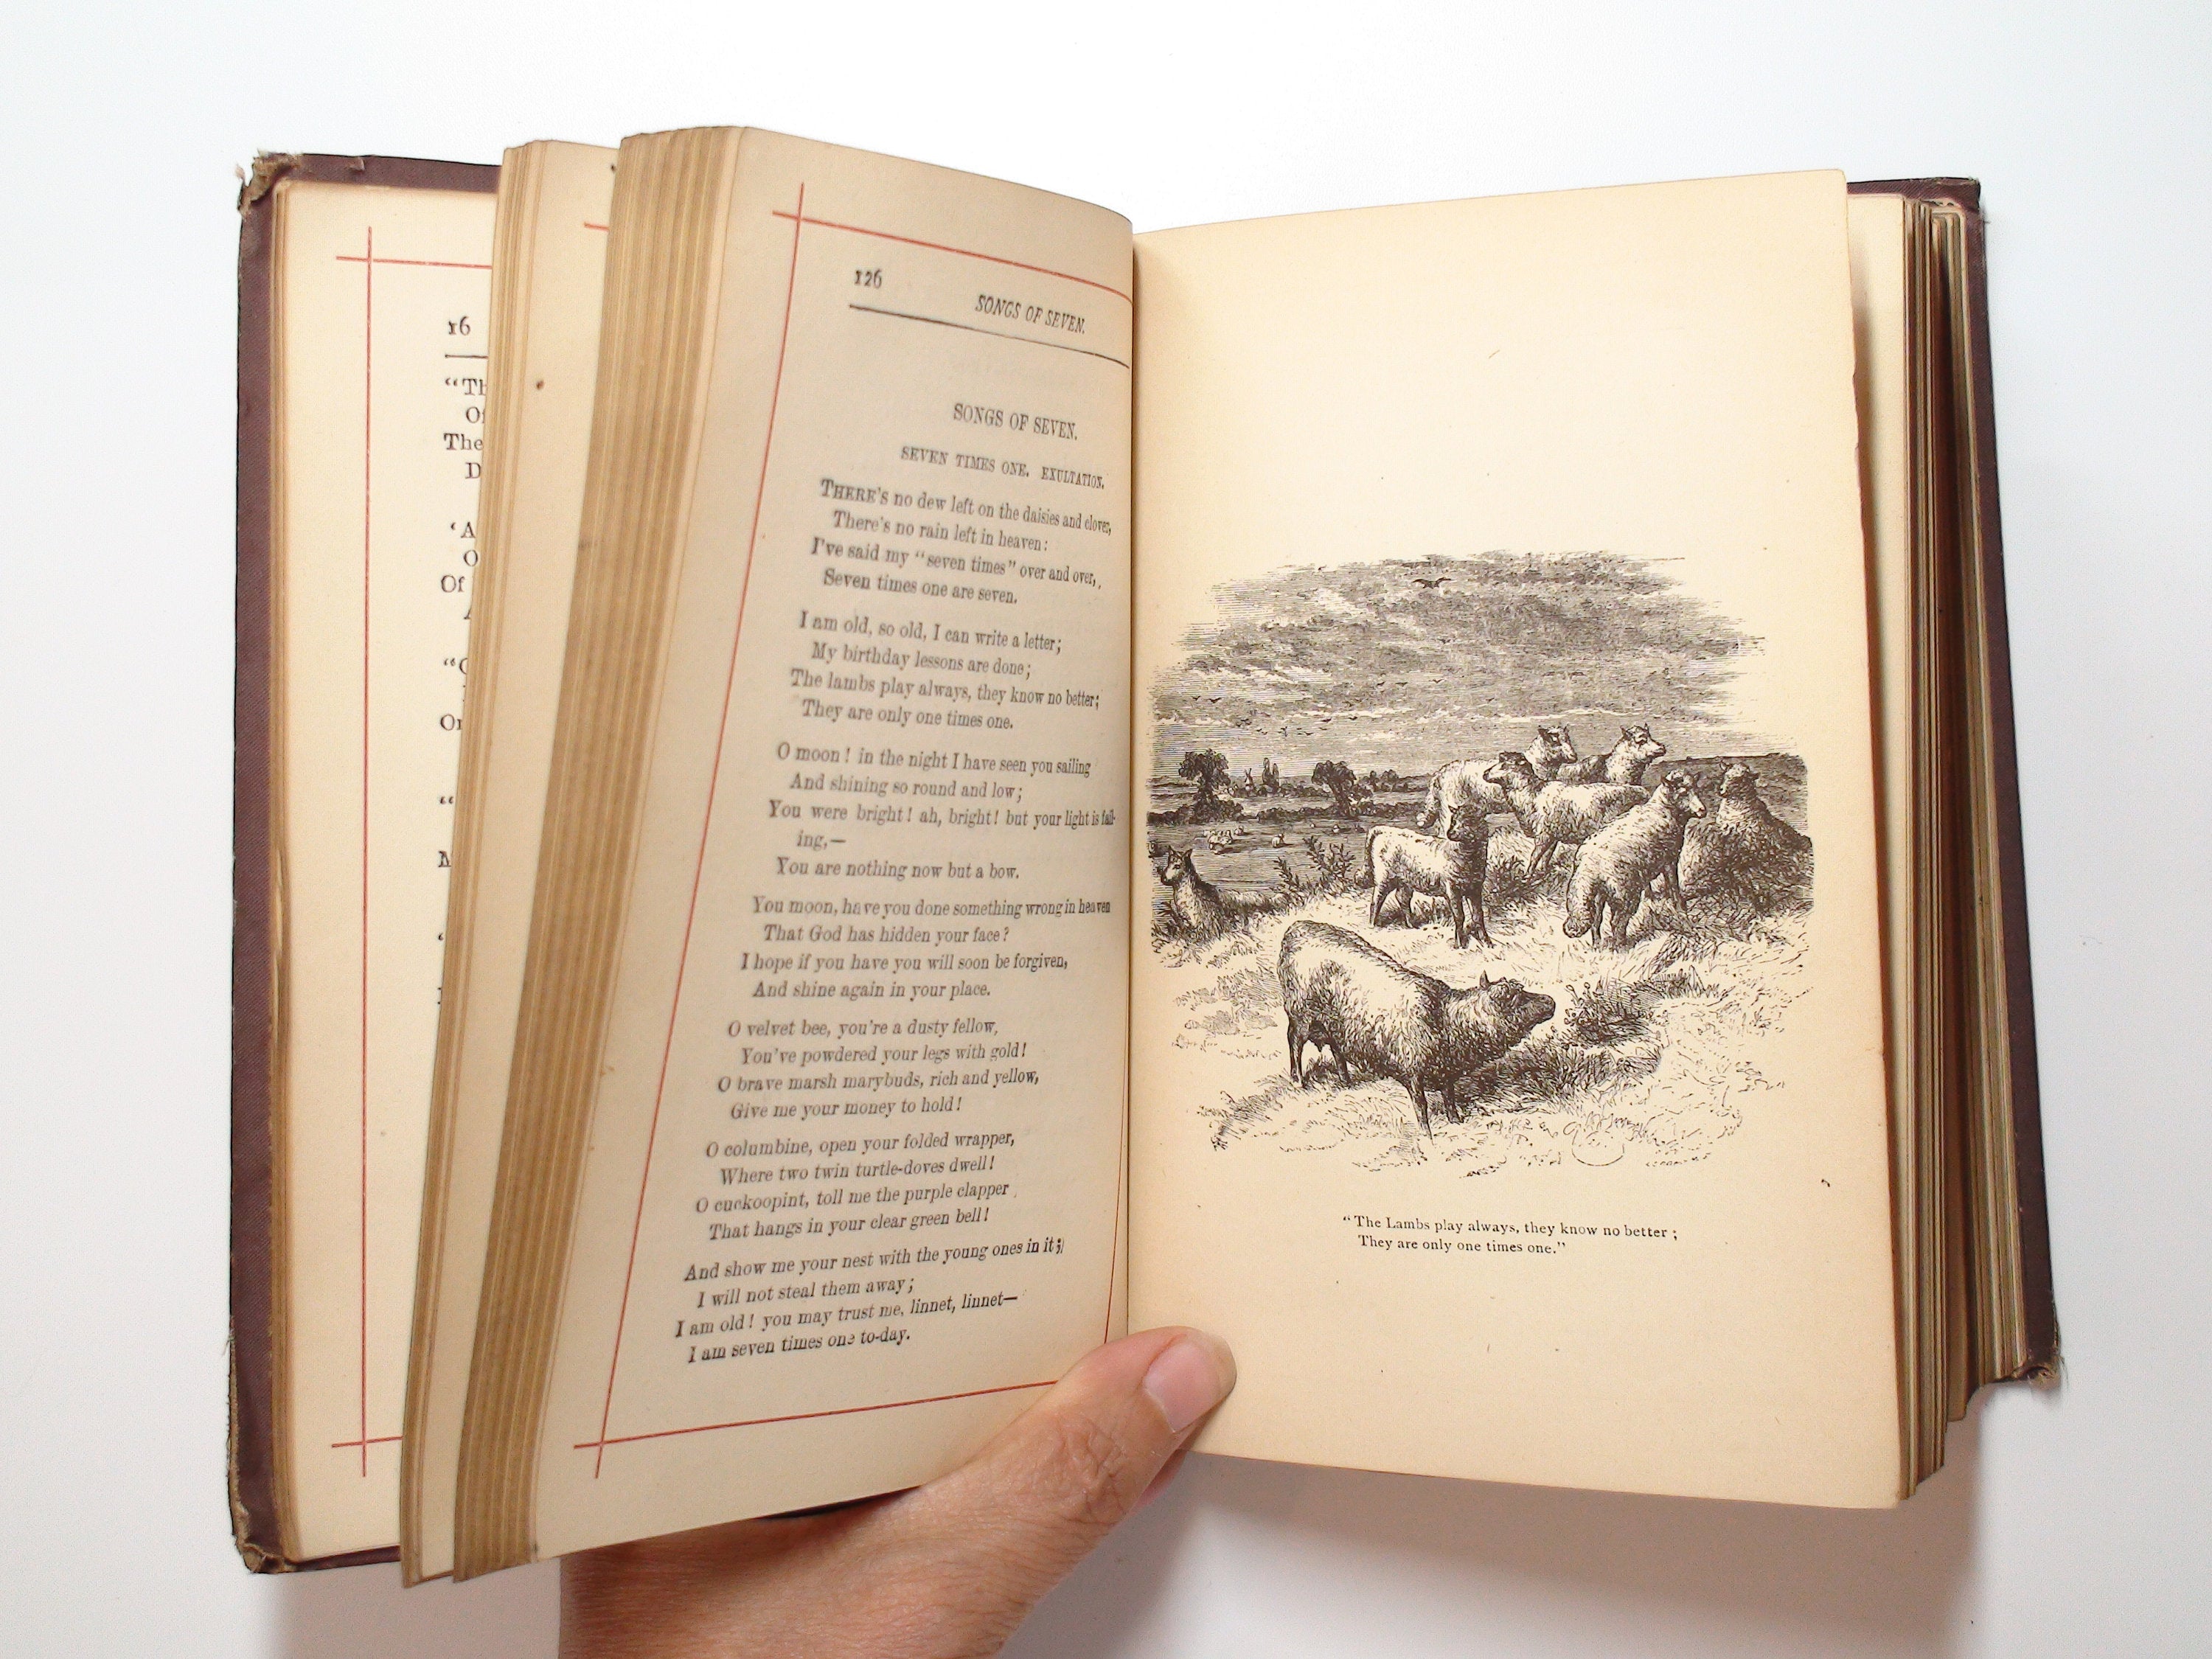 The Poetical Works of Jean Ingelow, Illustrated, Victorian Binding, 1881